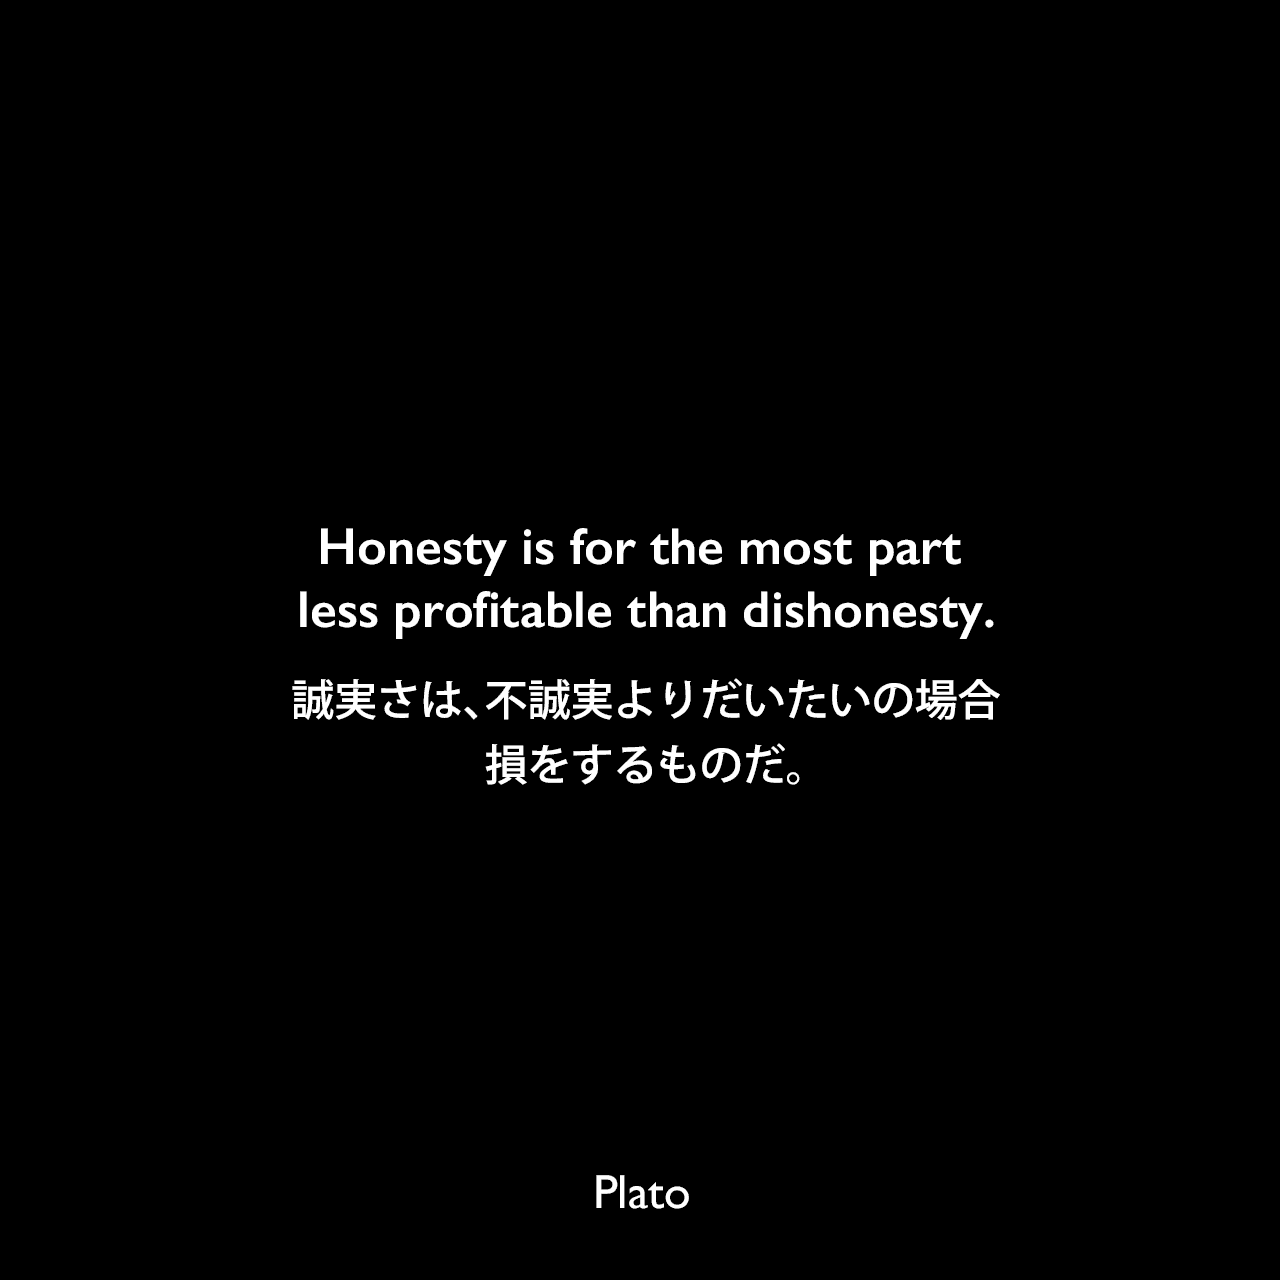 Honesty is for the most part less profitable than dishonesty.誠実さは、不誠実よりだいたいの場合、損をするものだ。Plato